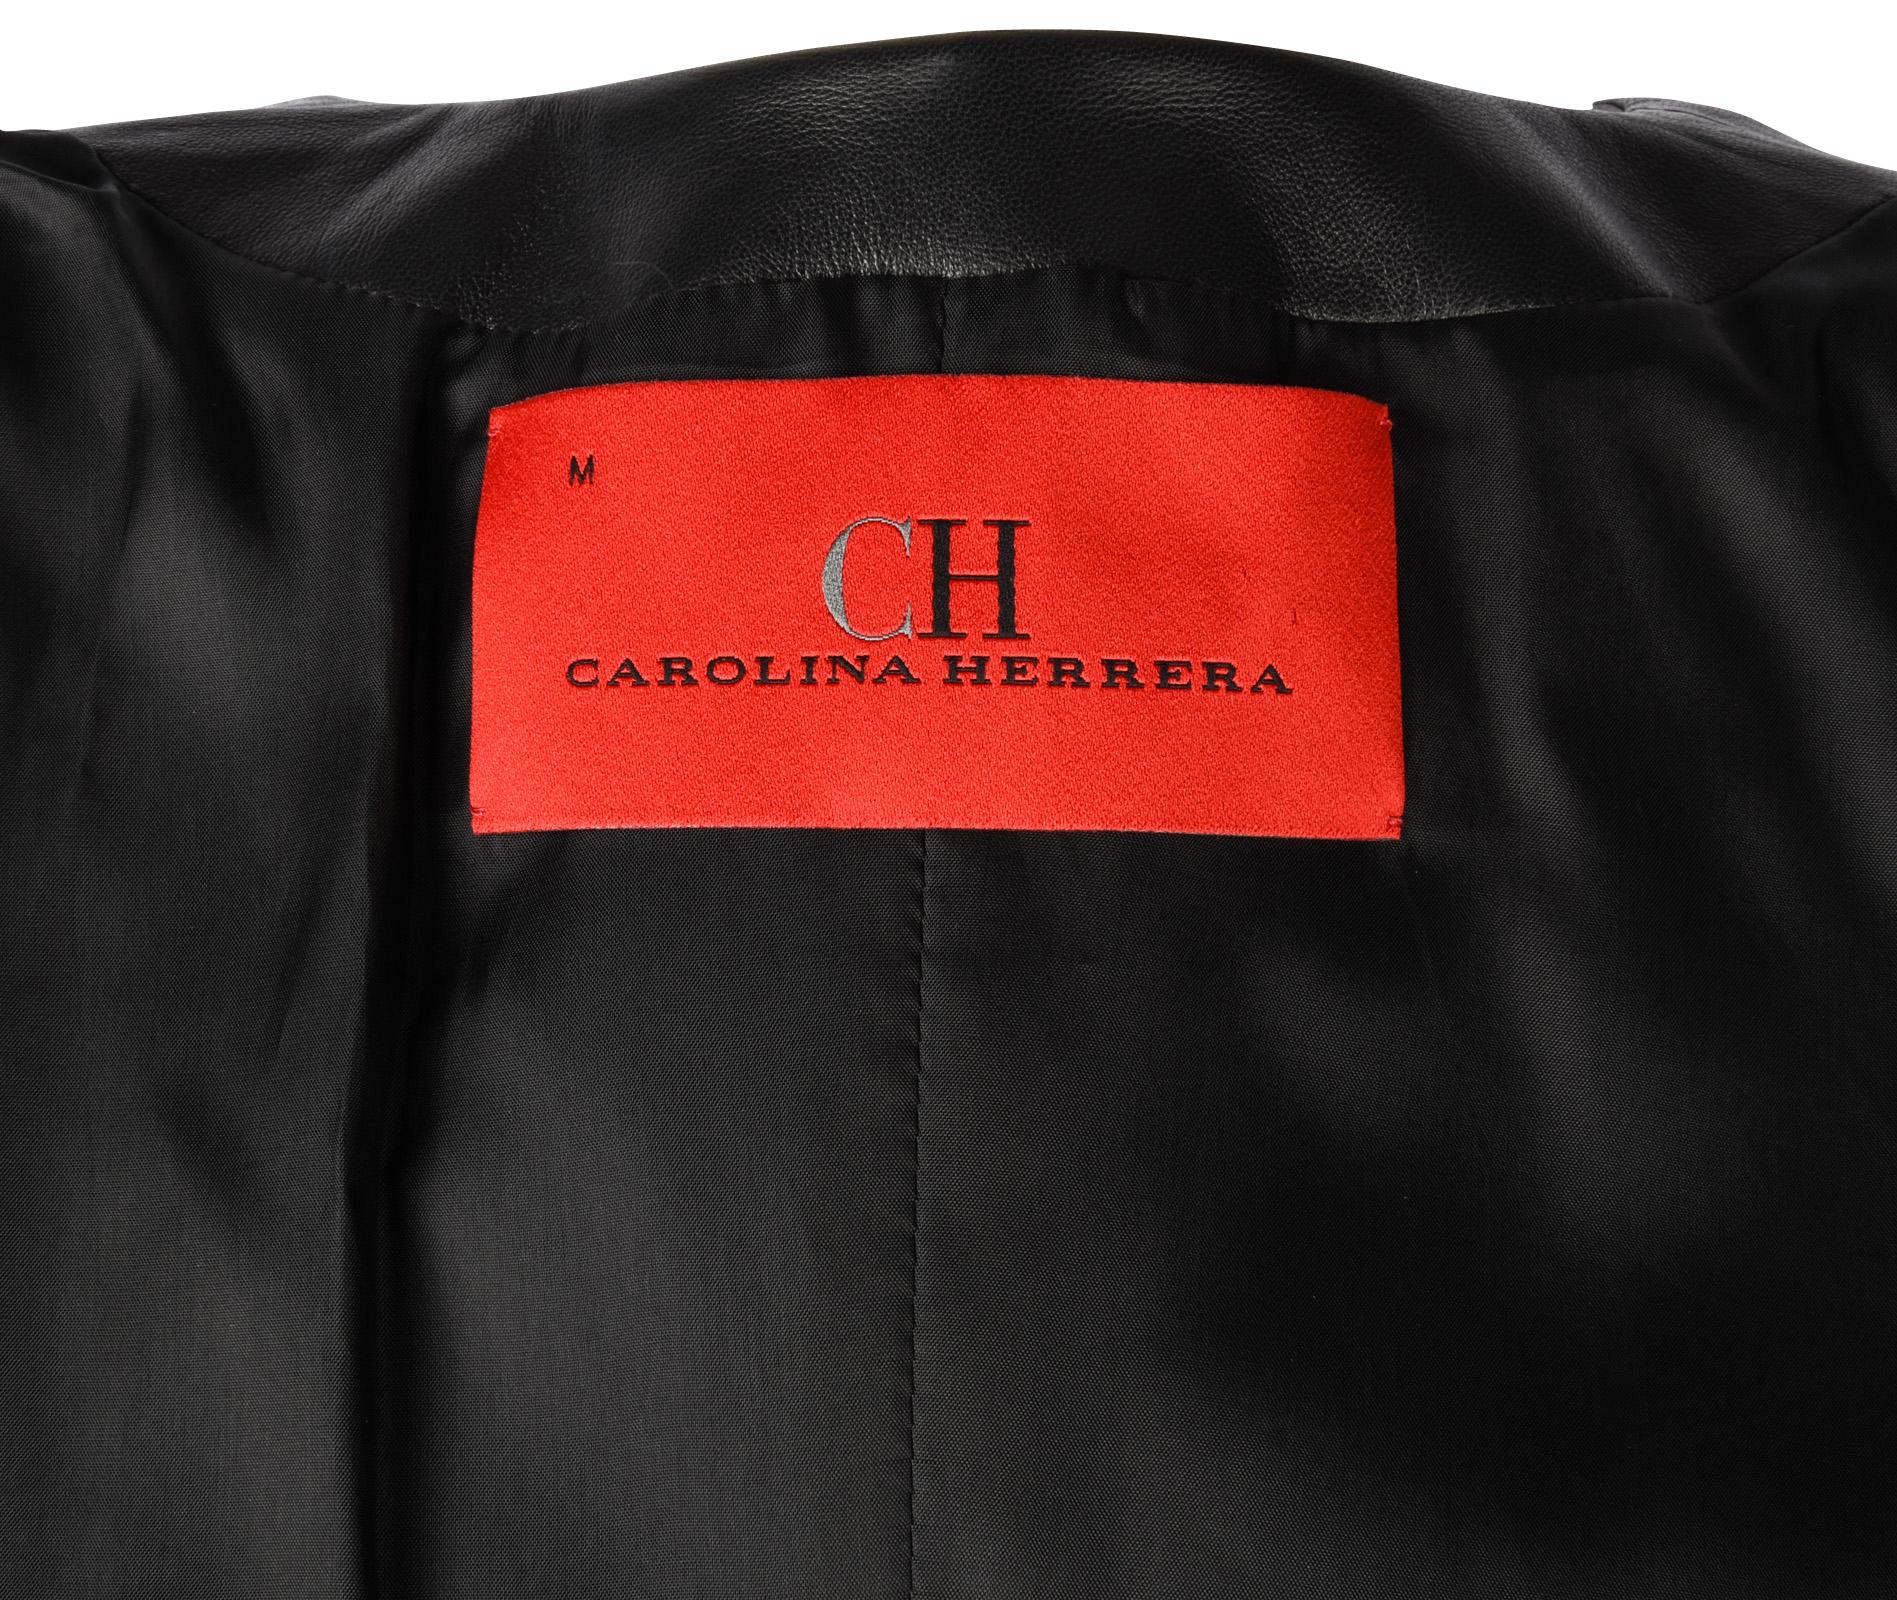 Carolina Herrera Jacket Peplum Black Lambskin Leather Feather Light 8 mint 3